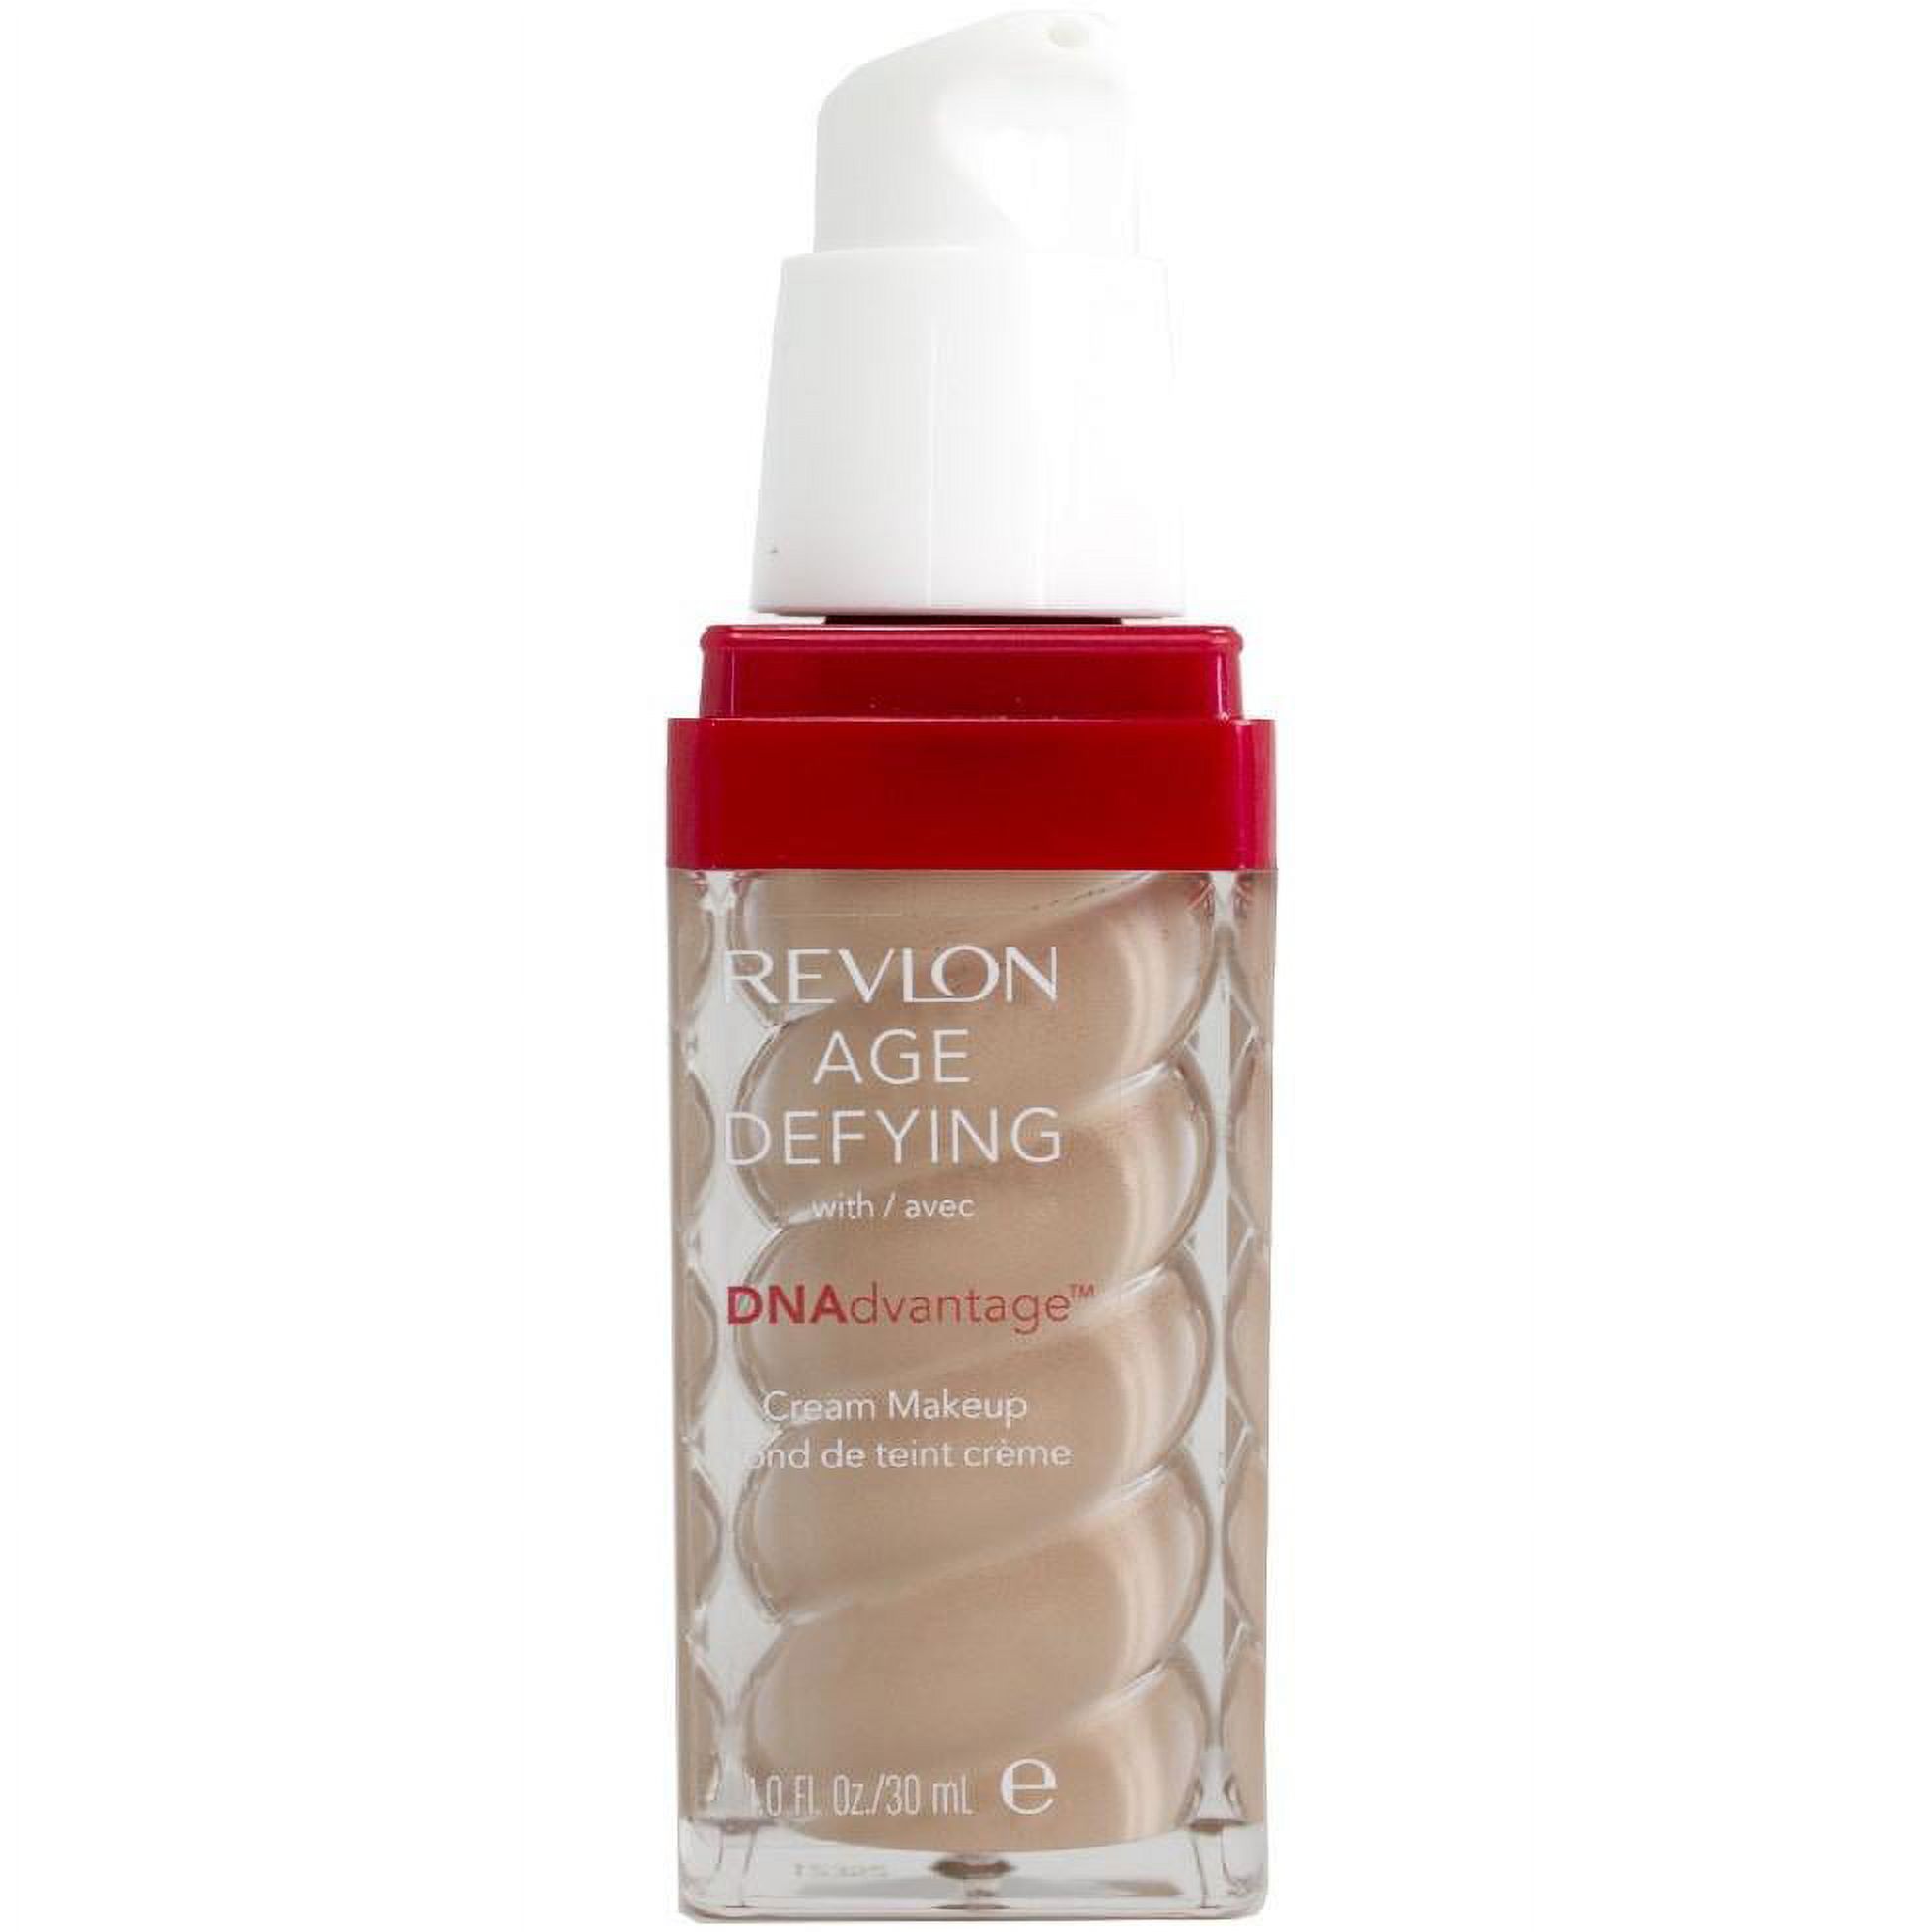 Revlon Age Defying with DNA Advantage Cream Makeup, 05 Fresh Ivory, 1 fl oz - image 5 of 12